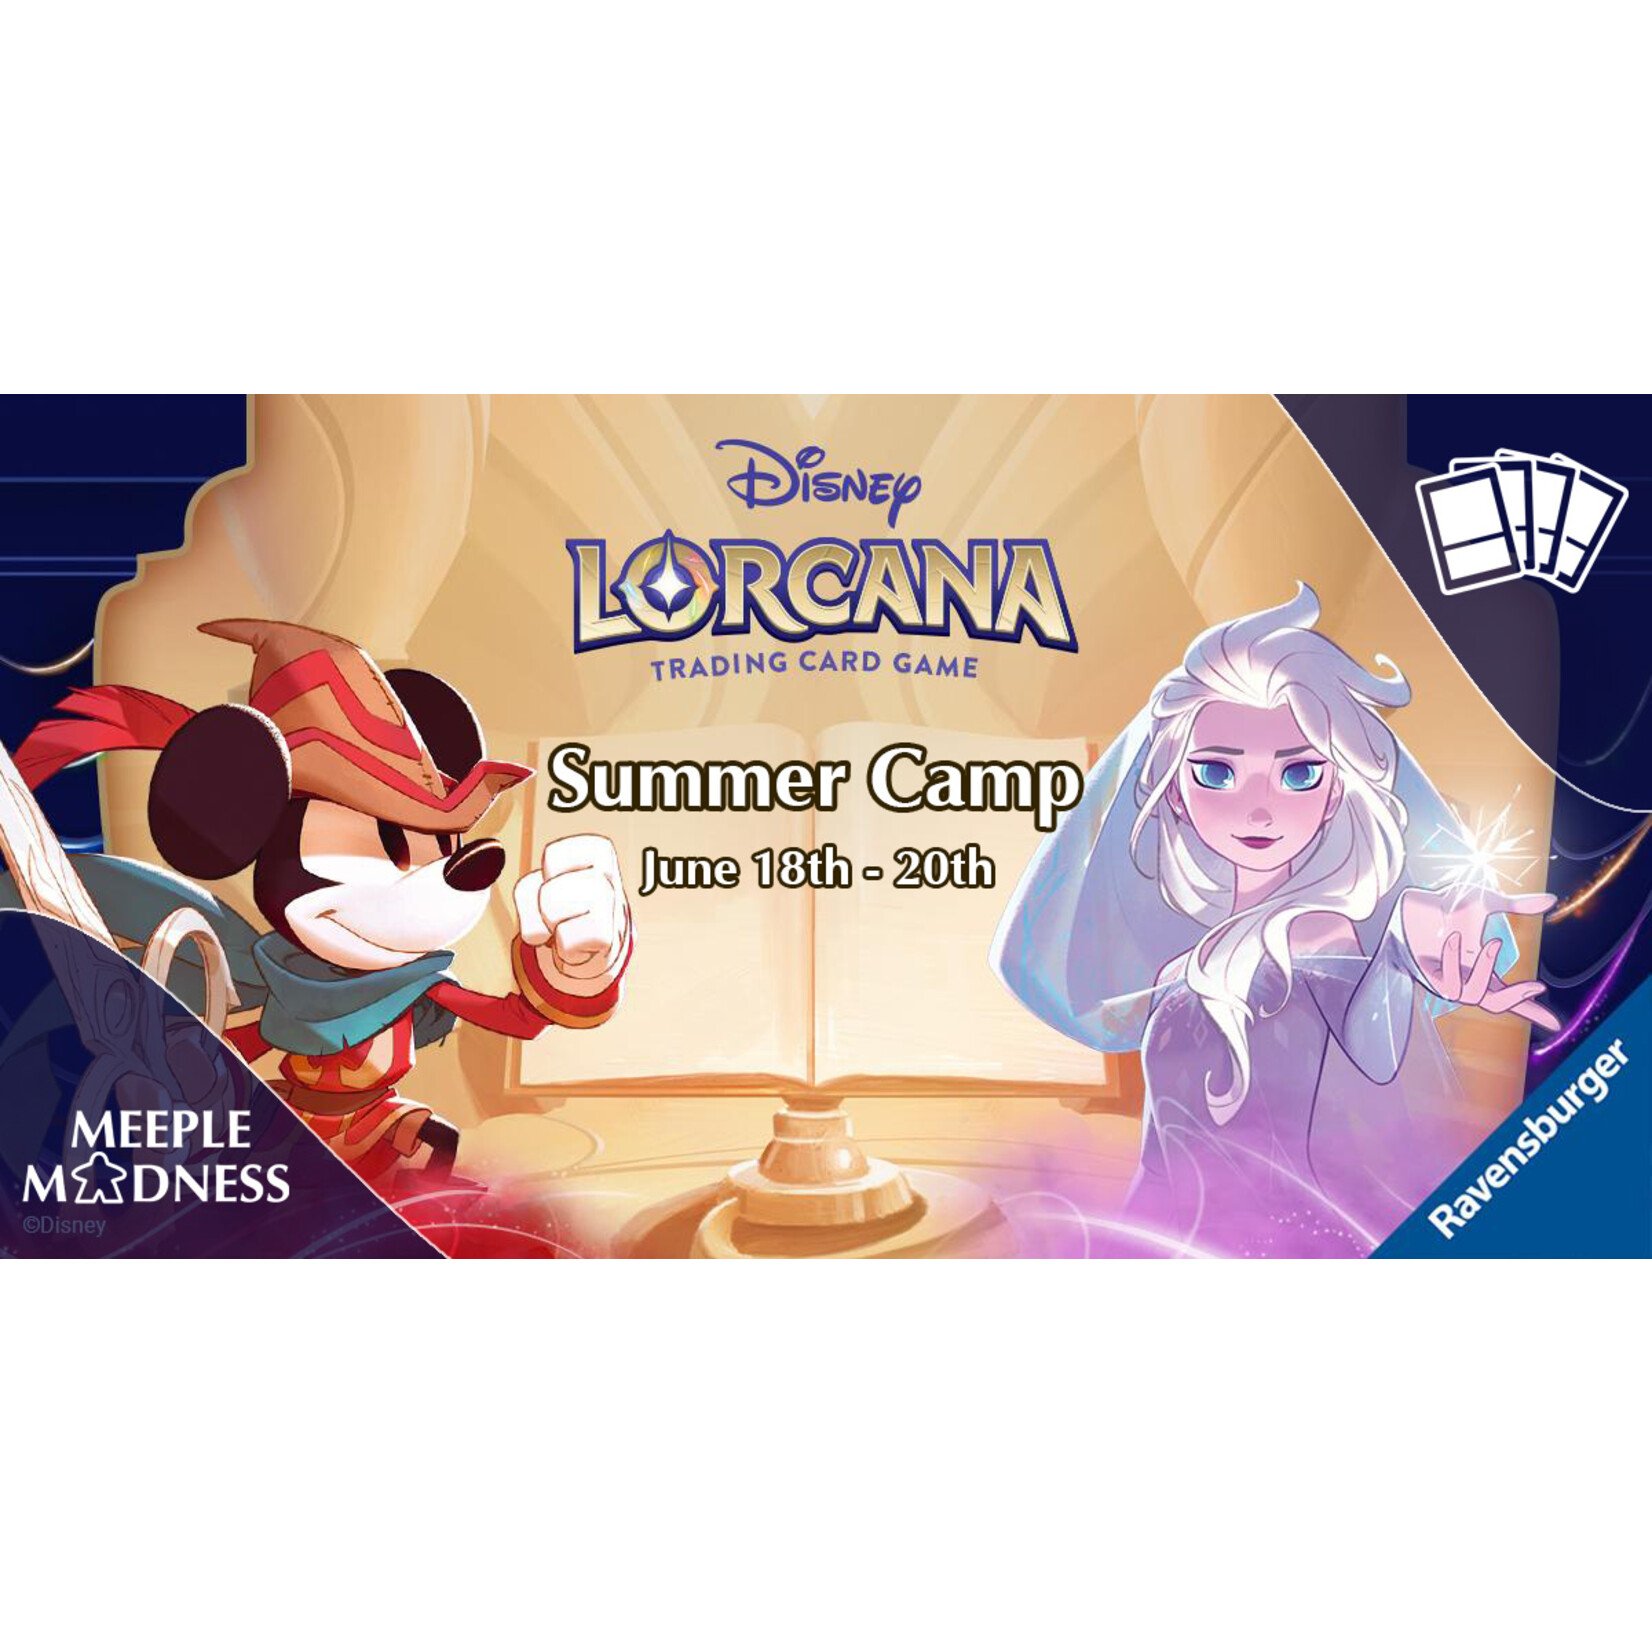 Meeple Madness Lorcana Summer Camp Deposit